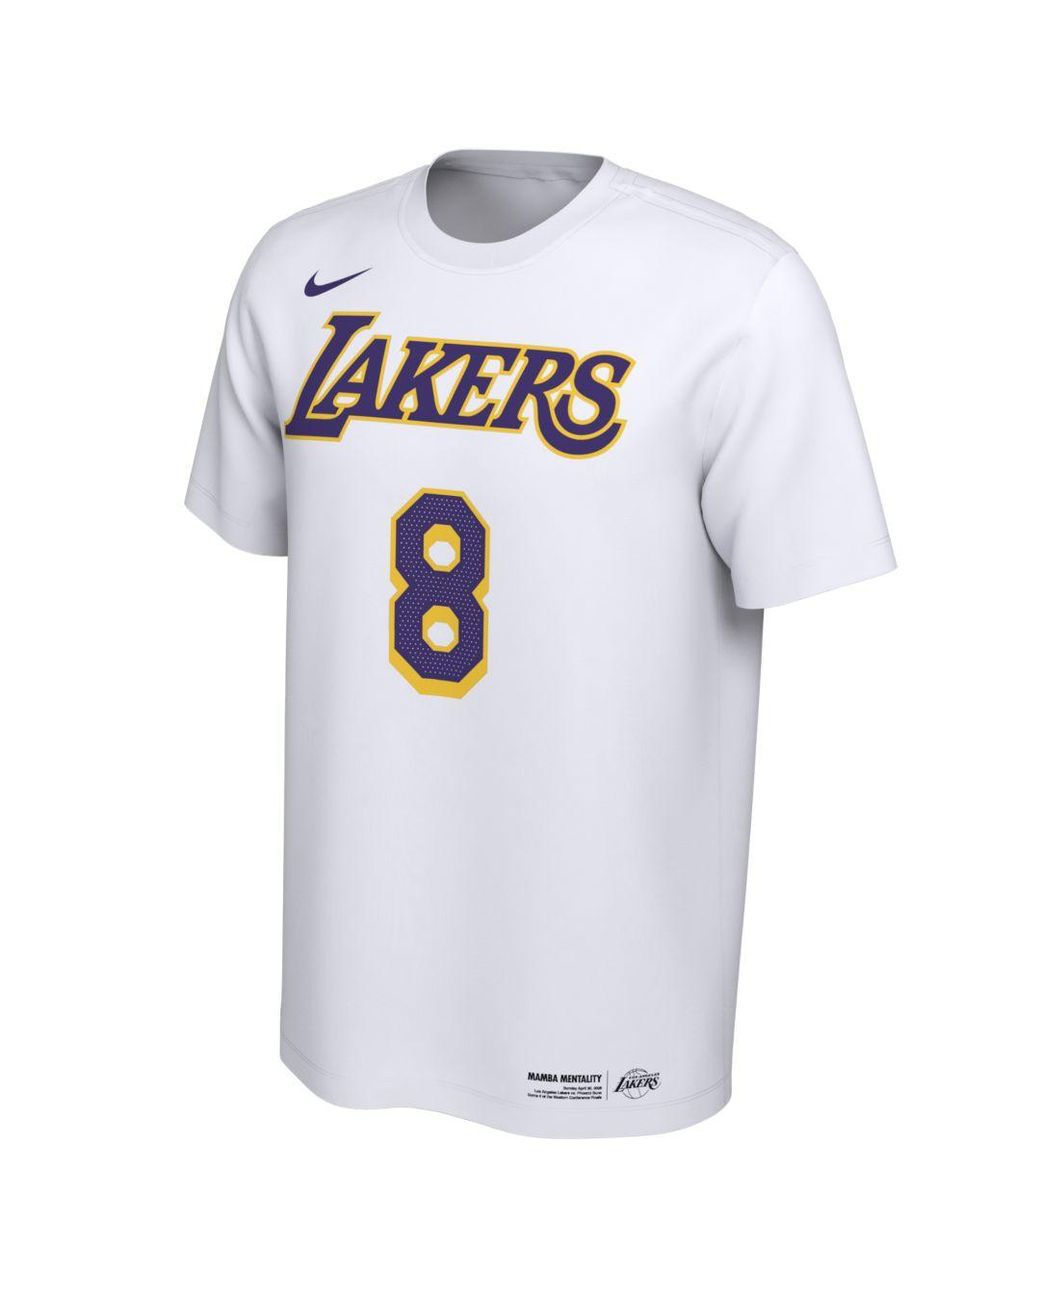 Nike NBA Los Angeles Lakers Yellow Logo Dri-Fit T-Shirt - NBA from